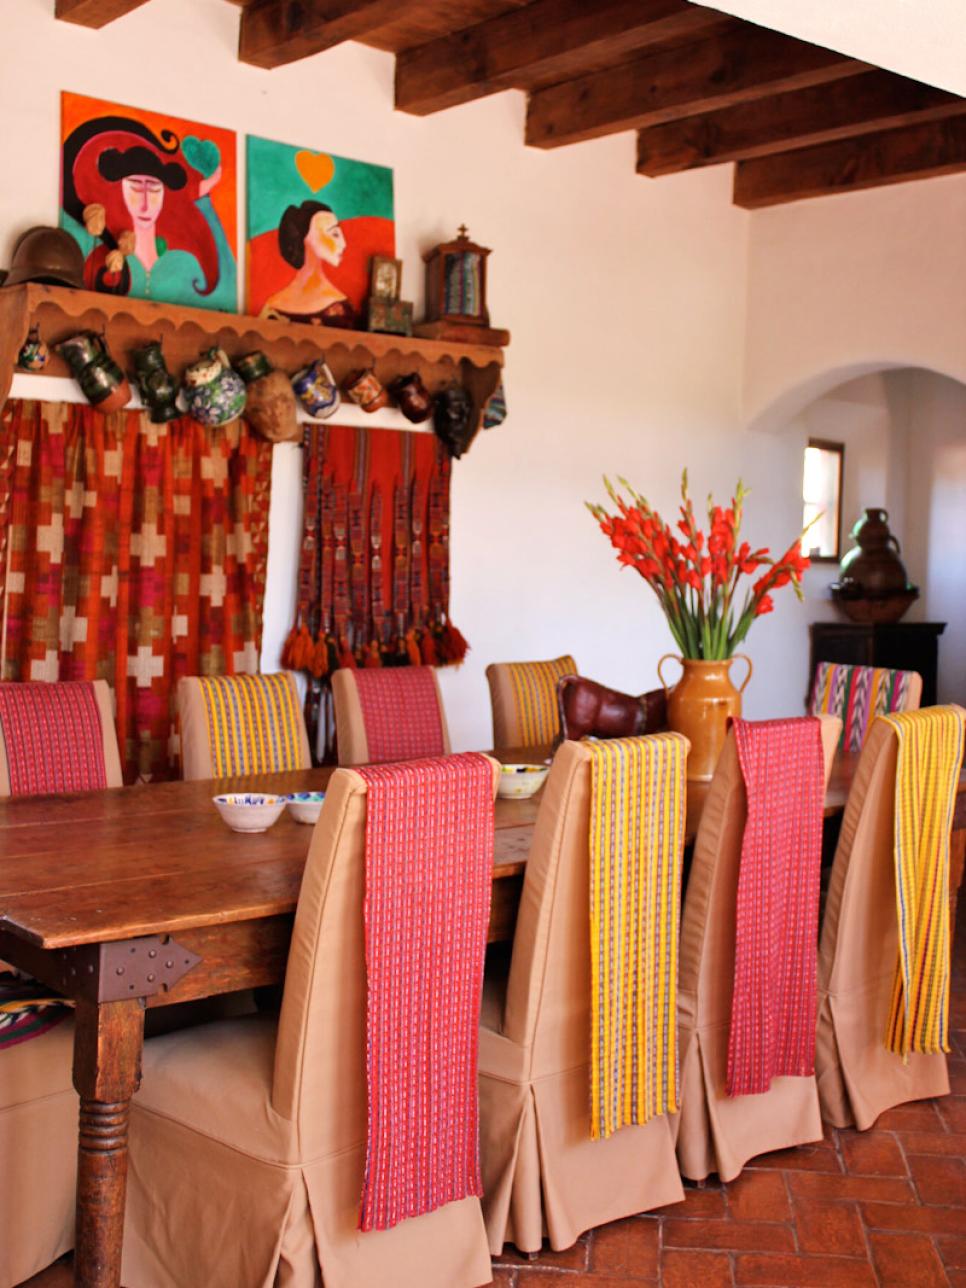 25 Southwestern Dining Room Design Ideas - Decoration Love